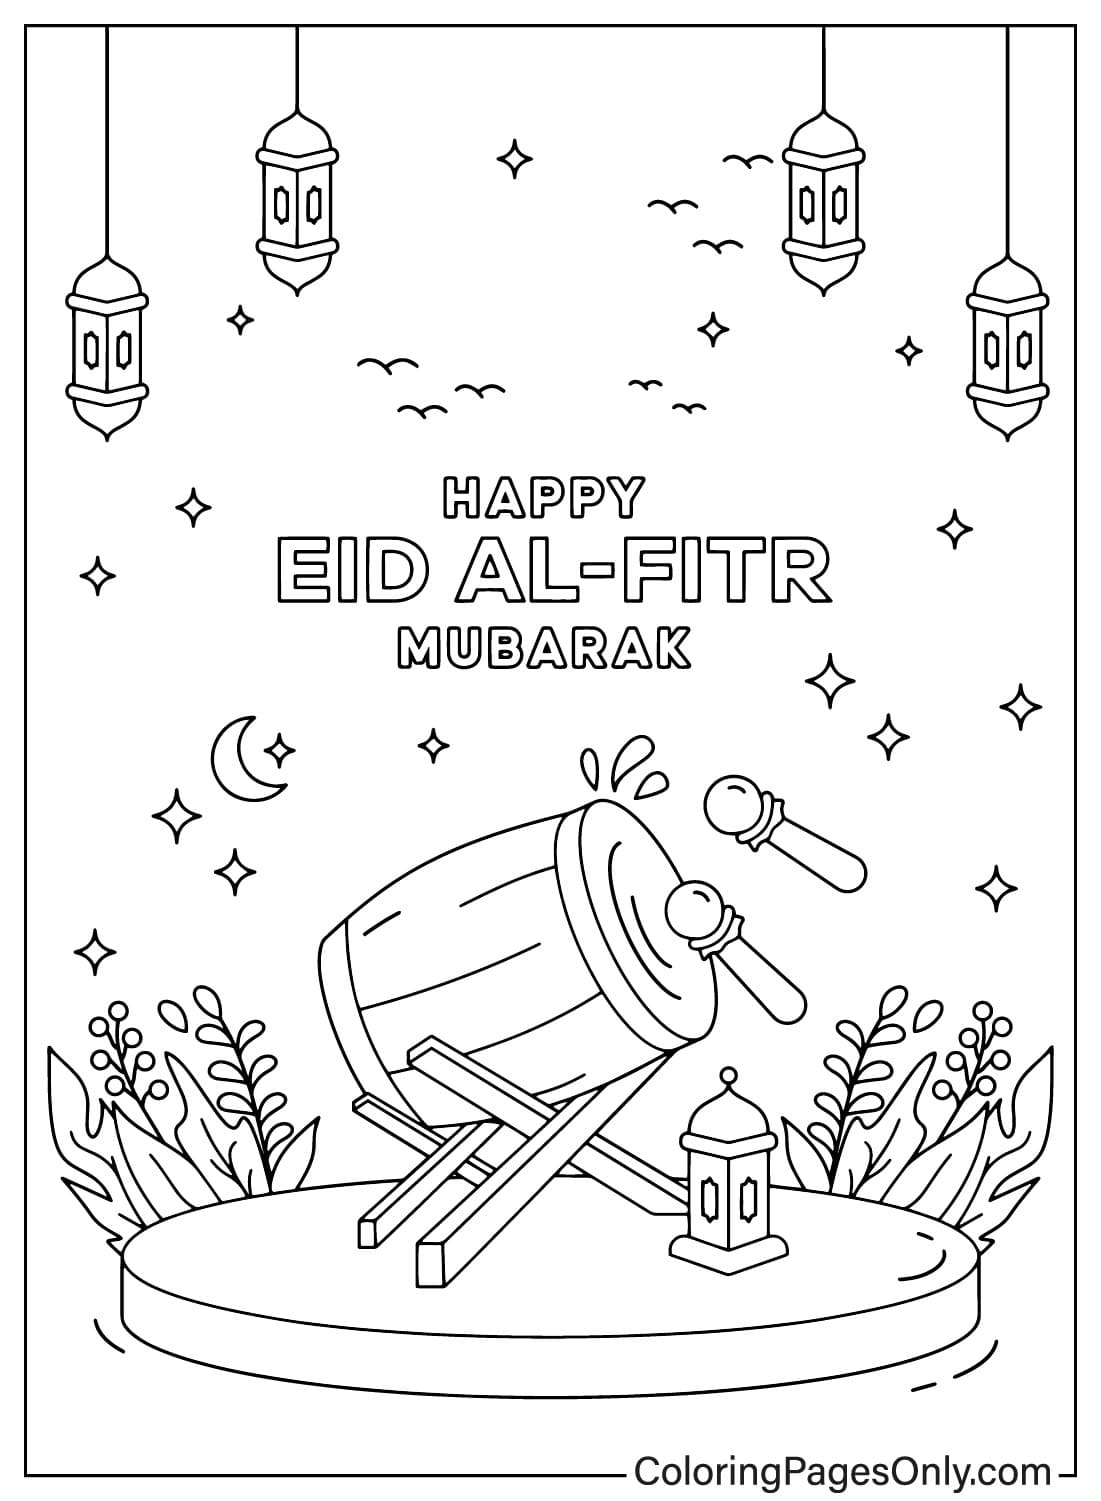 Afbeeldingen Eid Al-Fitr kleurplaat van Eid Al-Fitr